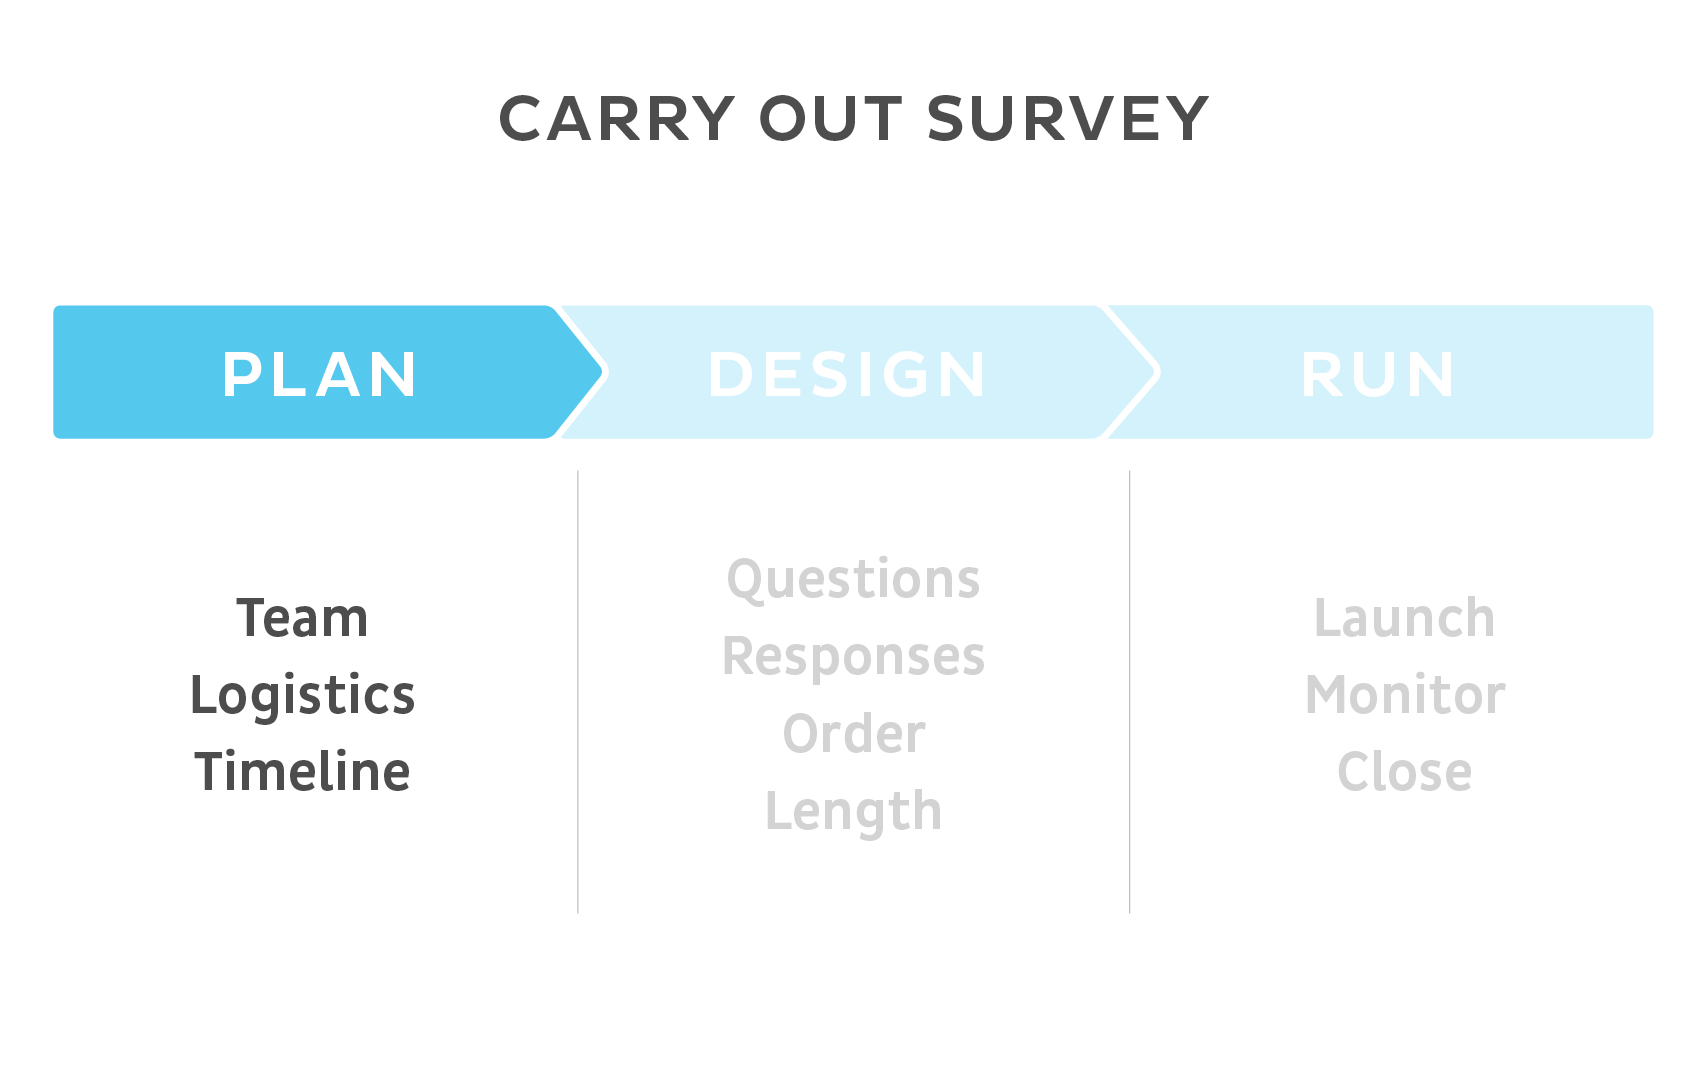 Carry out survey - PLAN